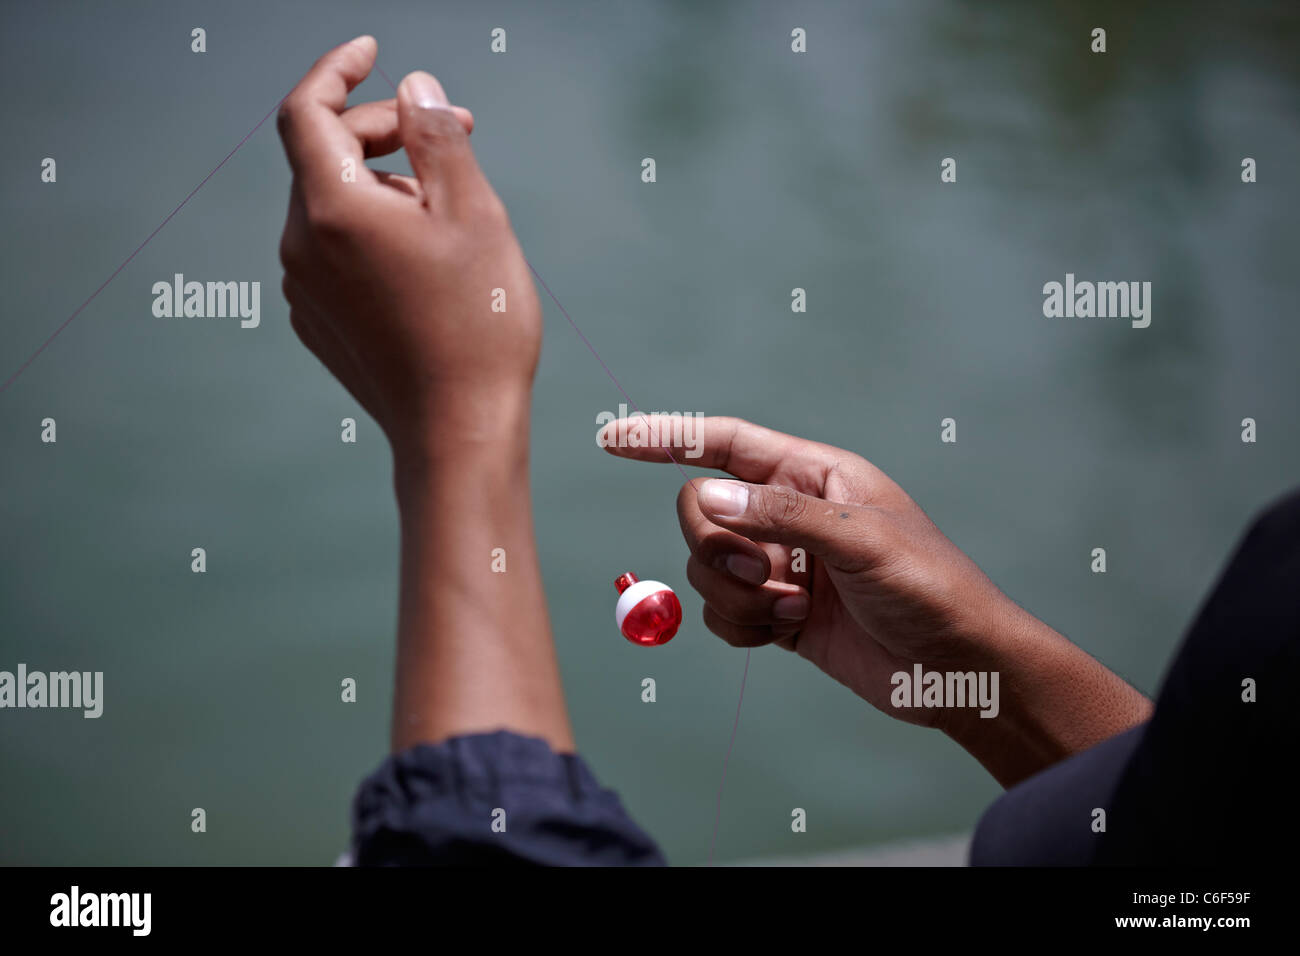 Cayendo de un objeto fotografías e imágenes de alta resolución - Alamy